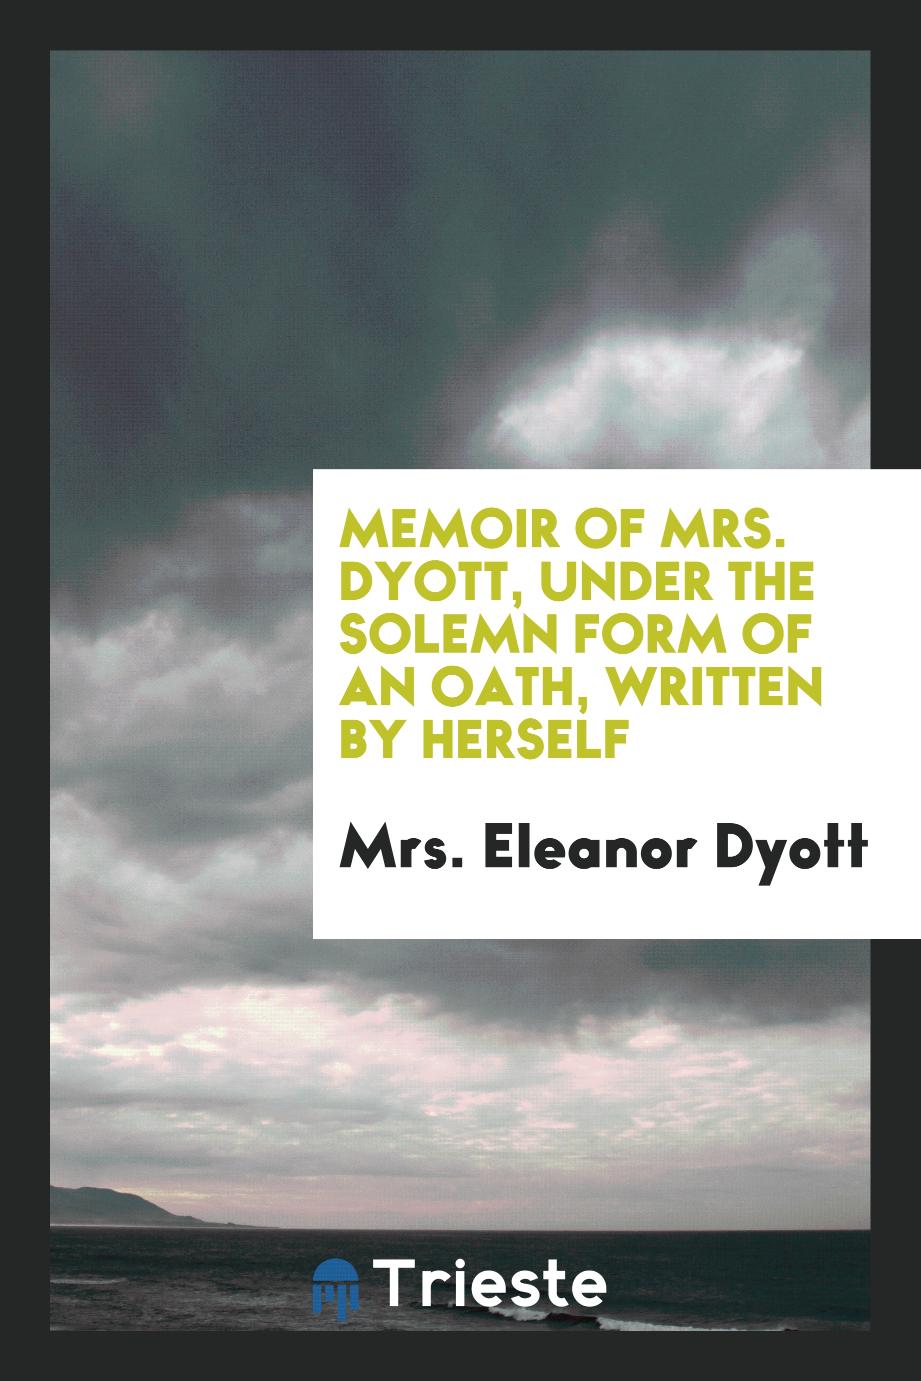 Memoir of mrs. Dyott, under the solemn form of an oath, written by herself